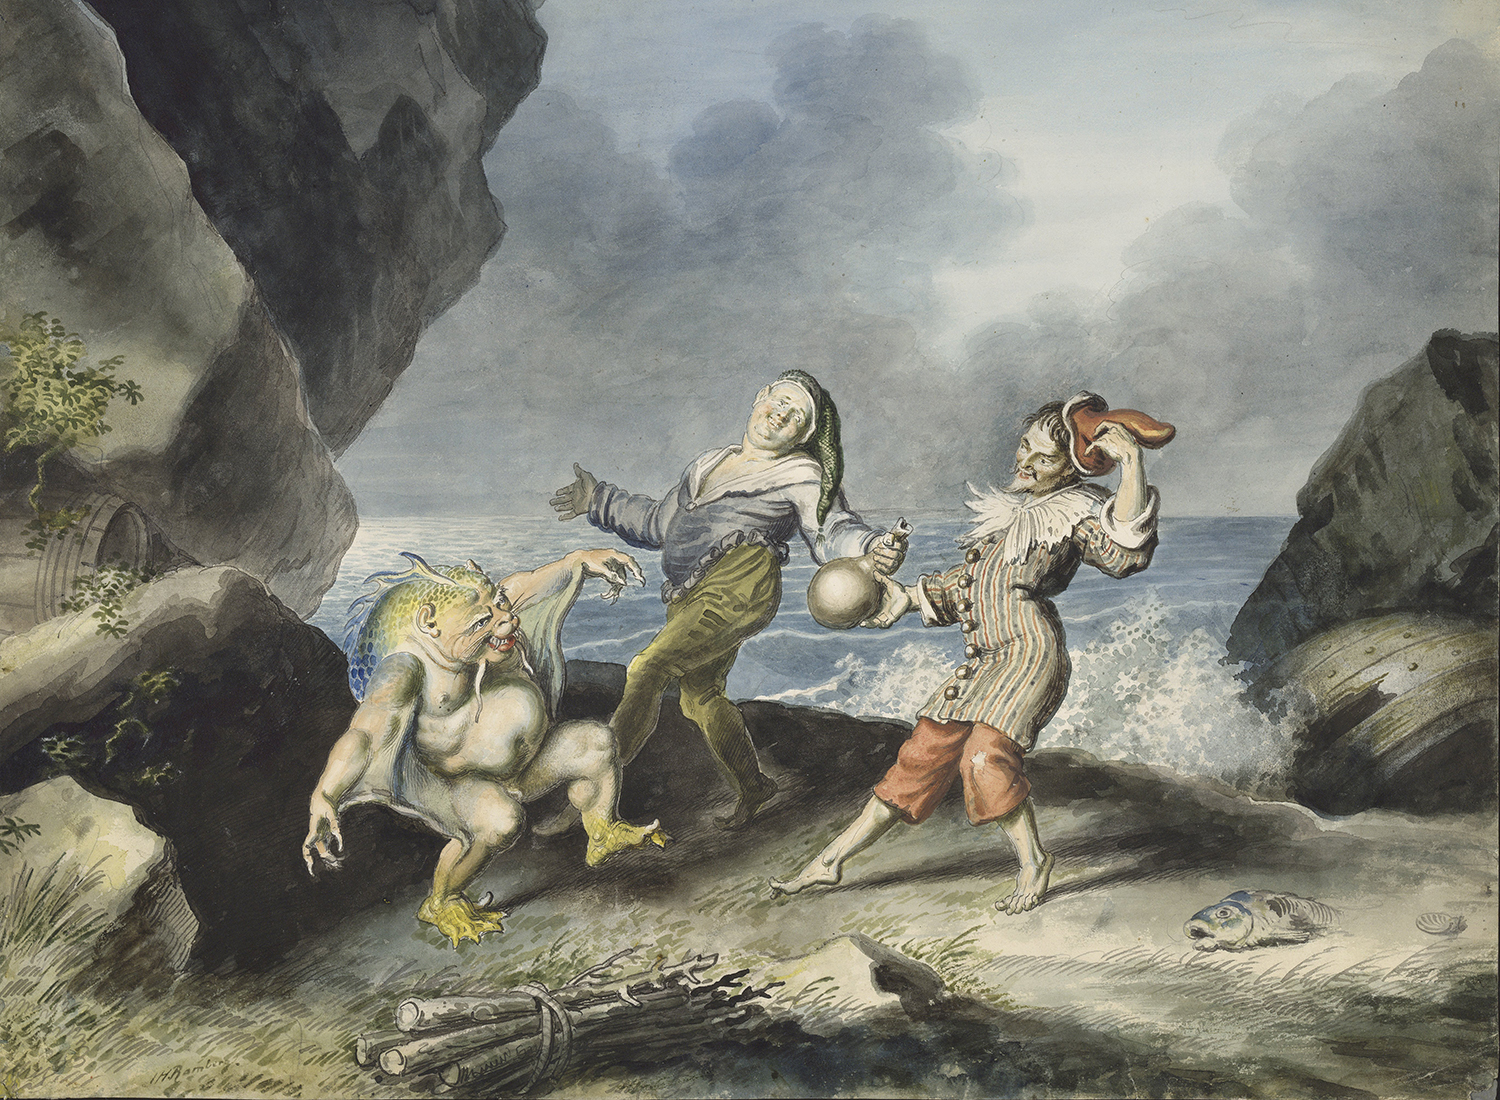 Painting by Johann Heirich Remberg, The Tempest circa 1800